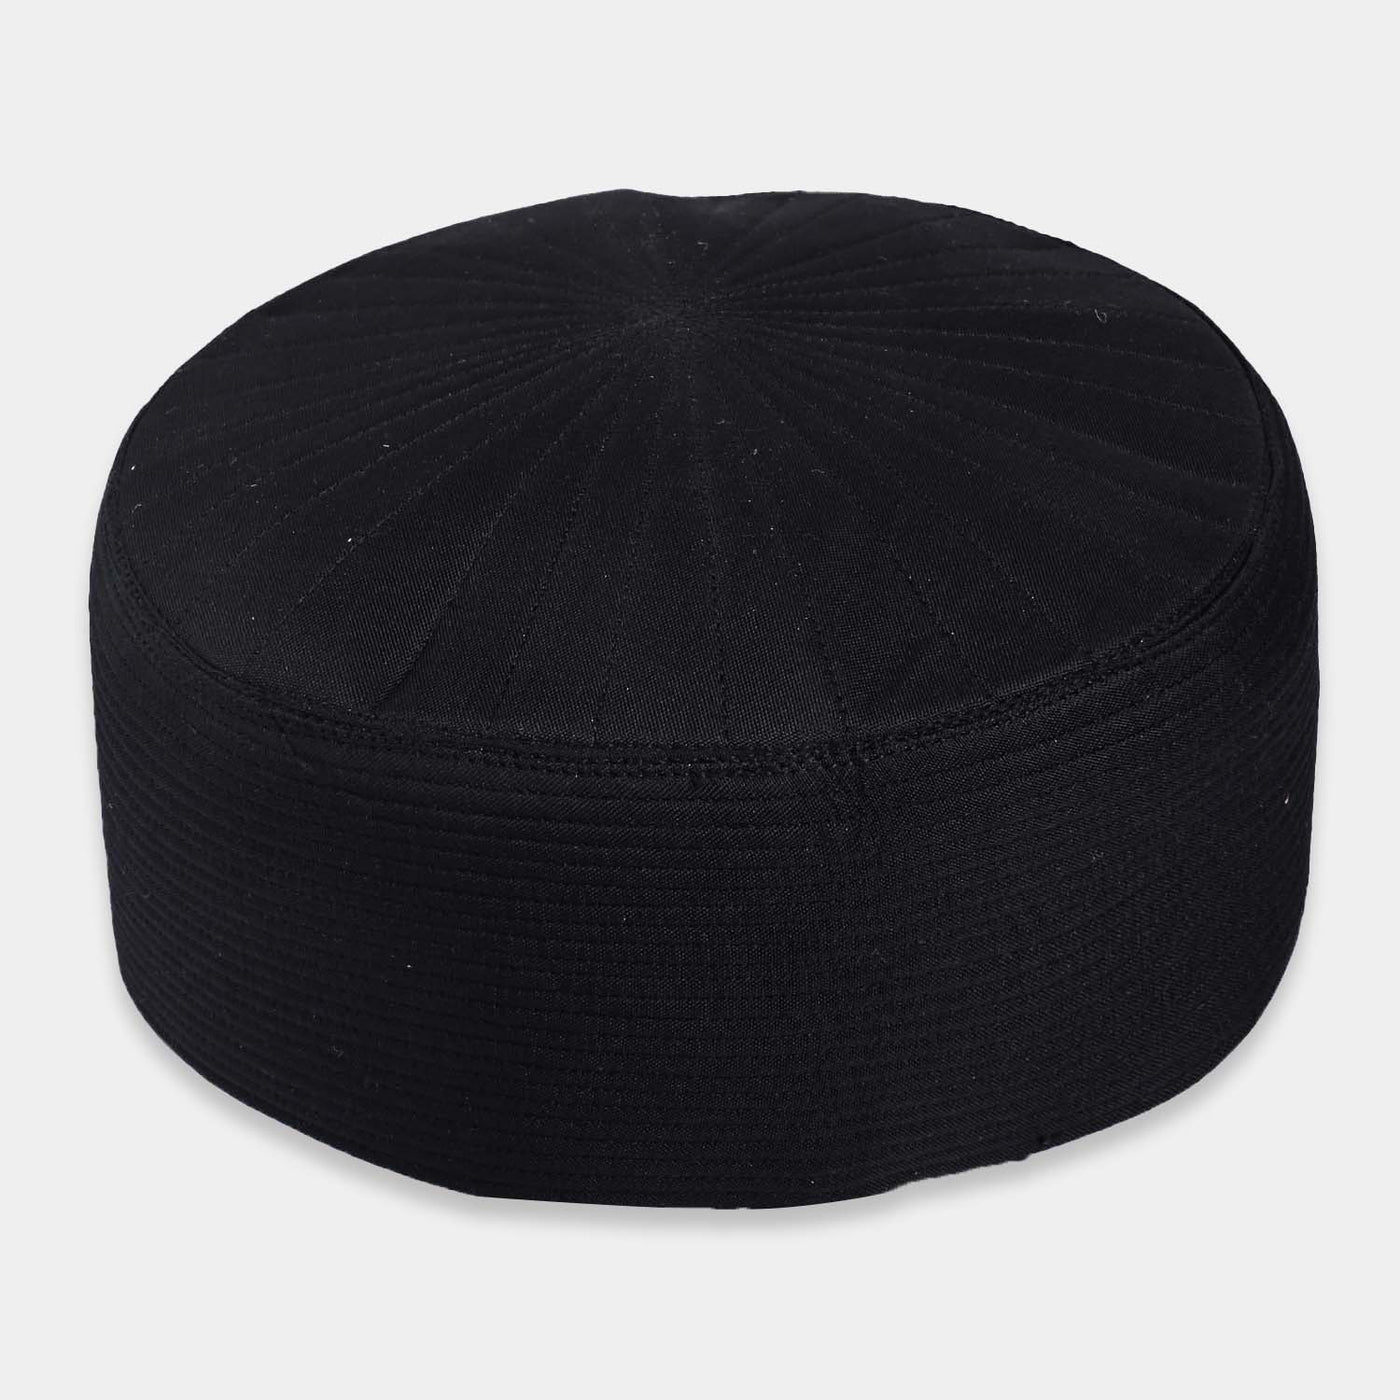 Islamic Prayer Cap-Black